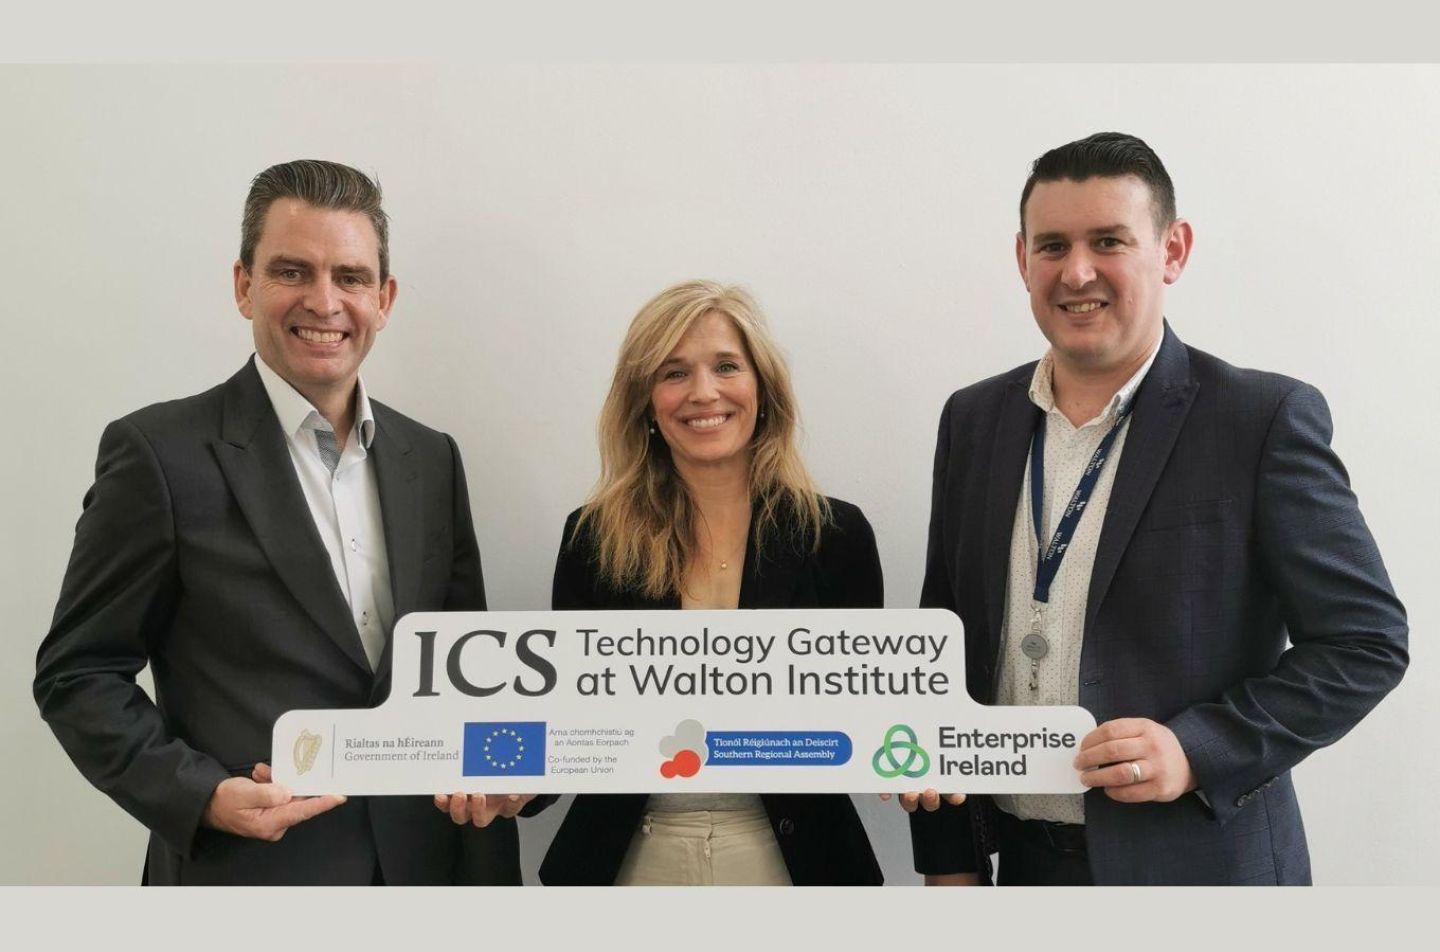 Introducing ICS Technology Gateway at Walton Institute